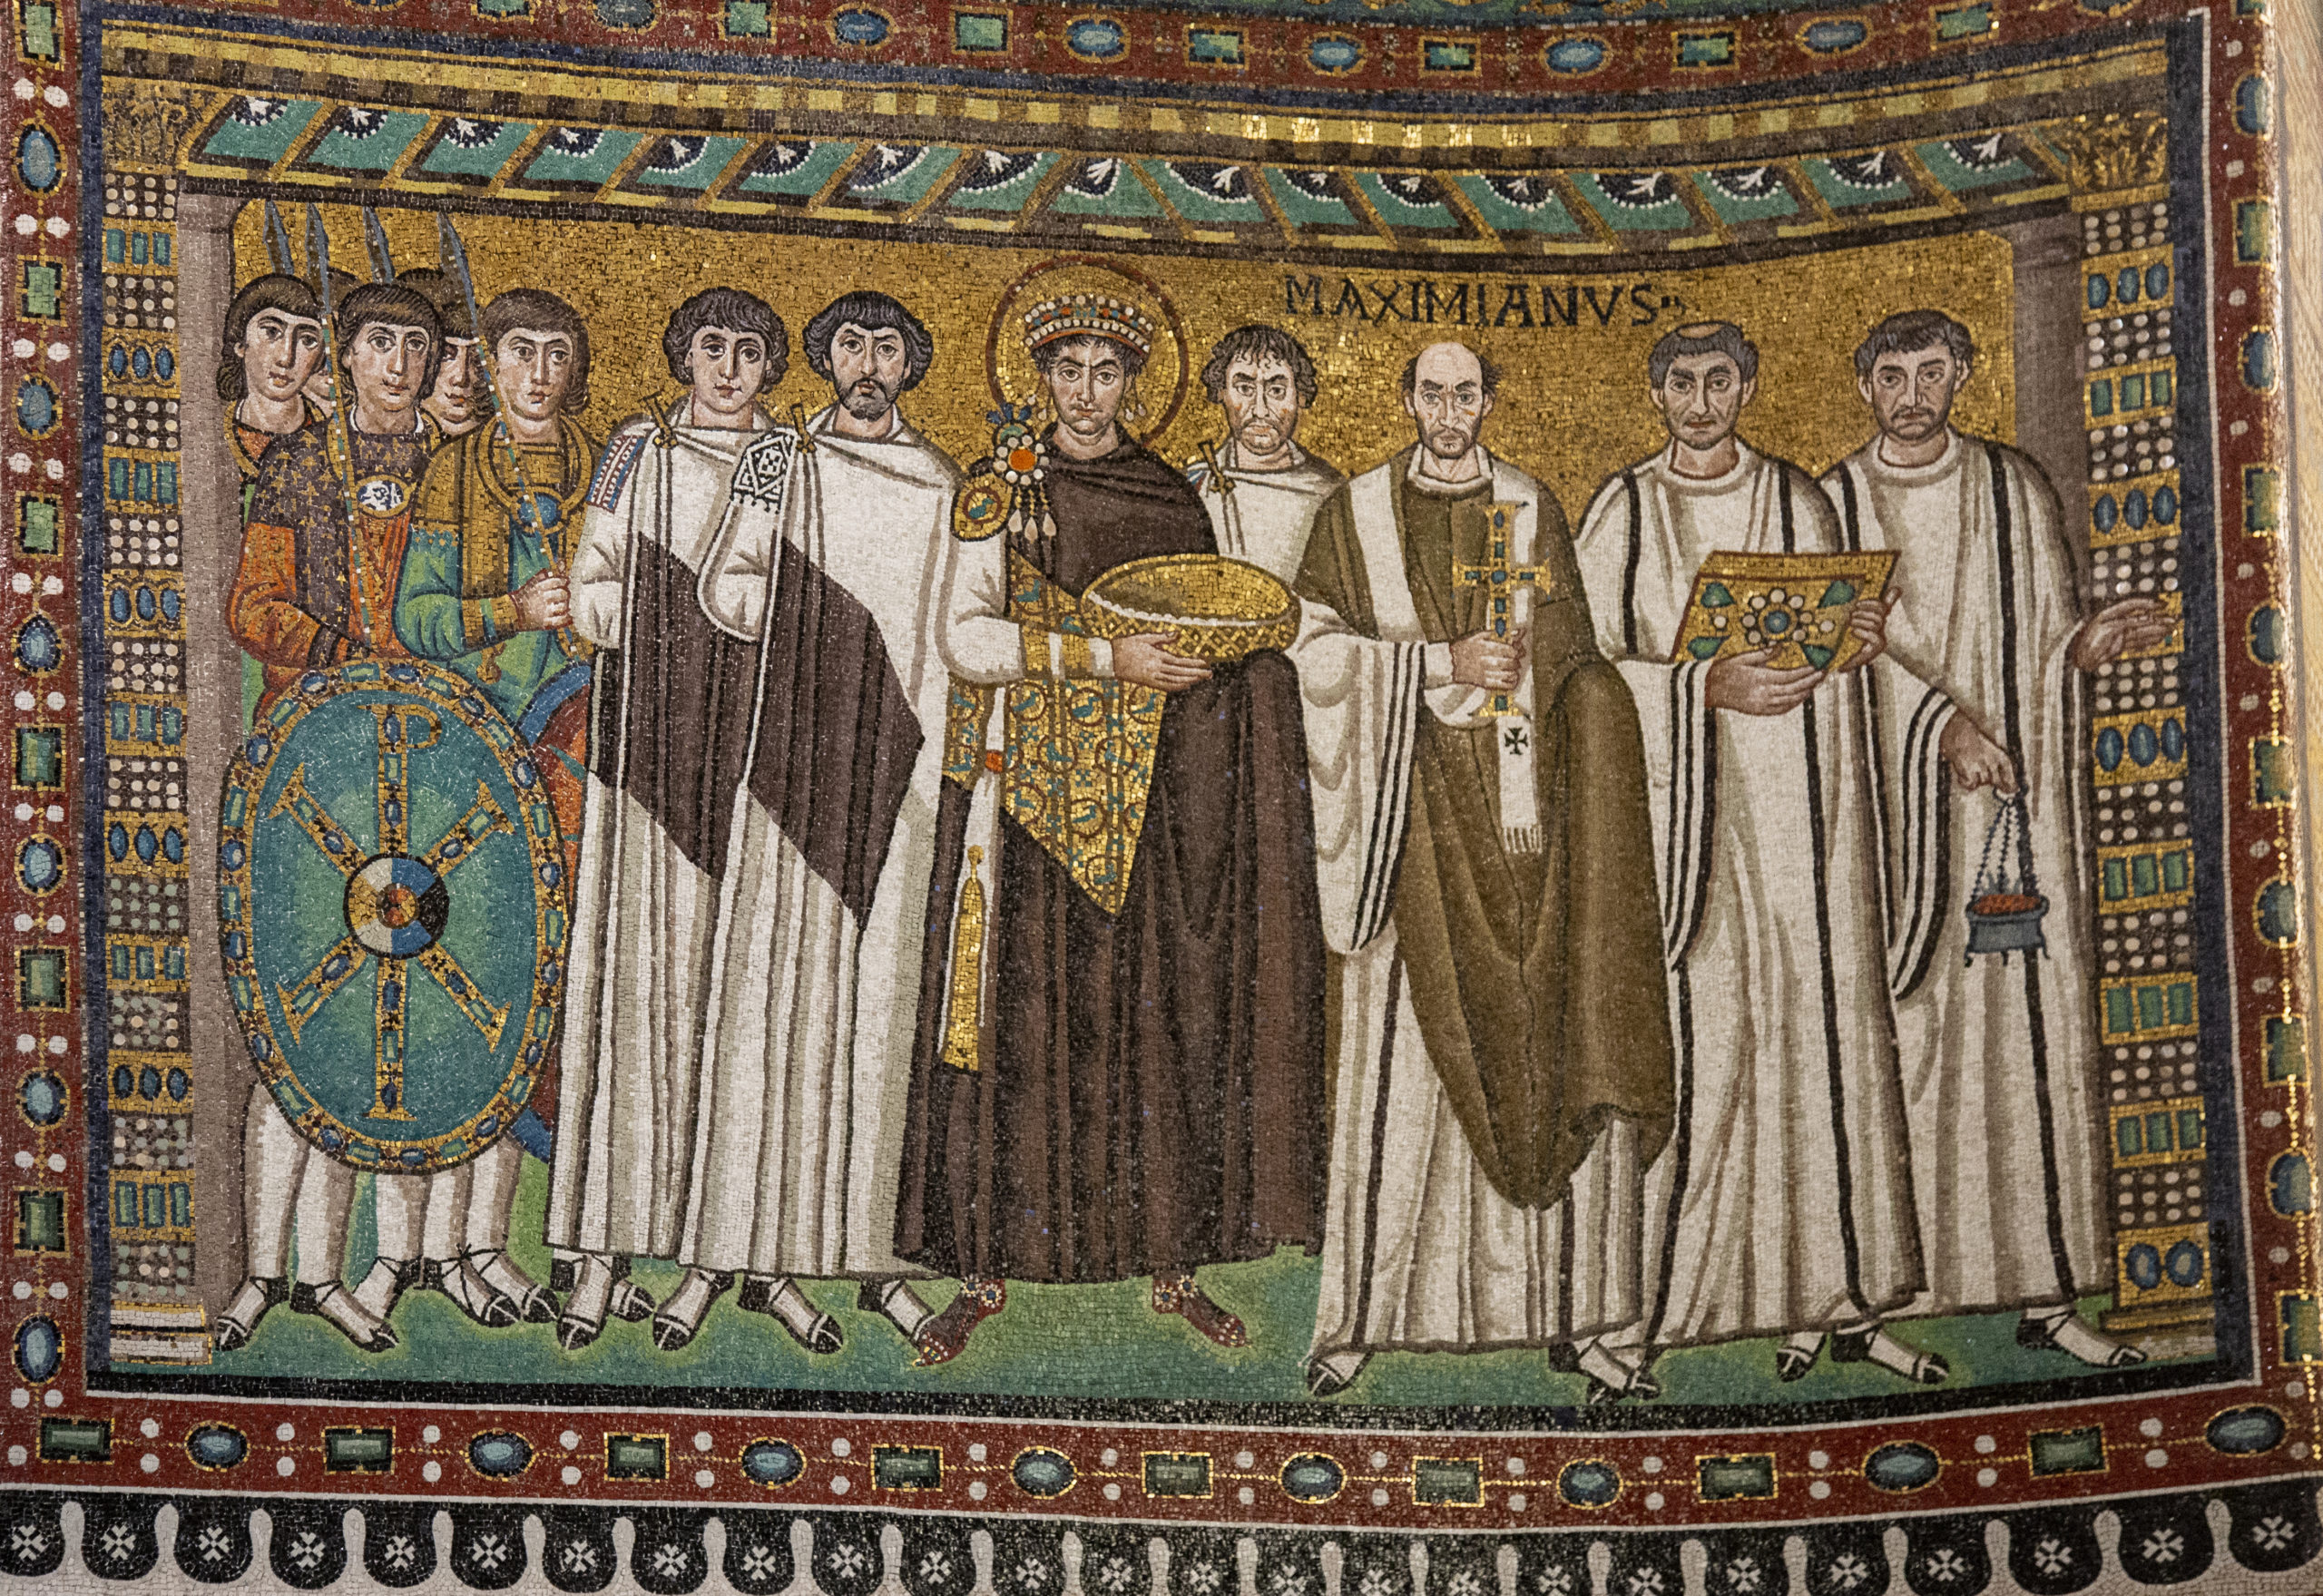 Justinian mosaic, 540s, San Vitale, Ravenna (photo: <a href="https://flic.kr/p/2jMxT6Z">byzantologist</a>, CC BY-NC-SA 2.0)